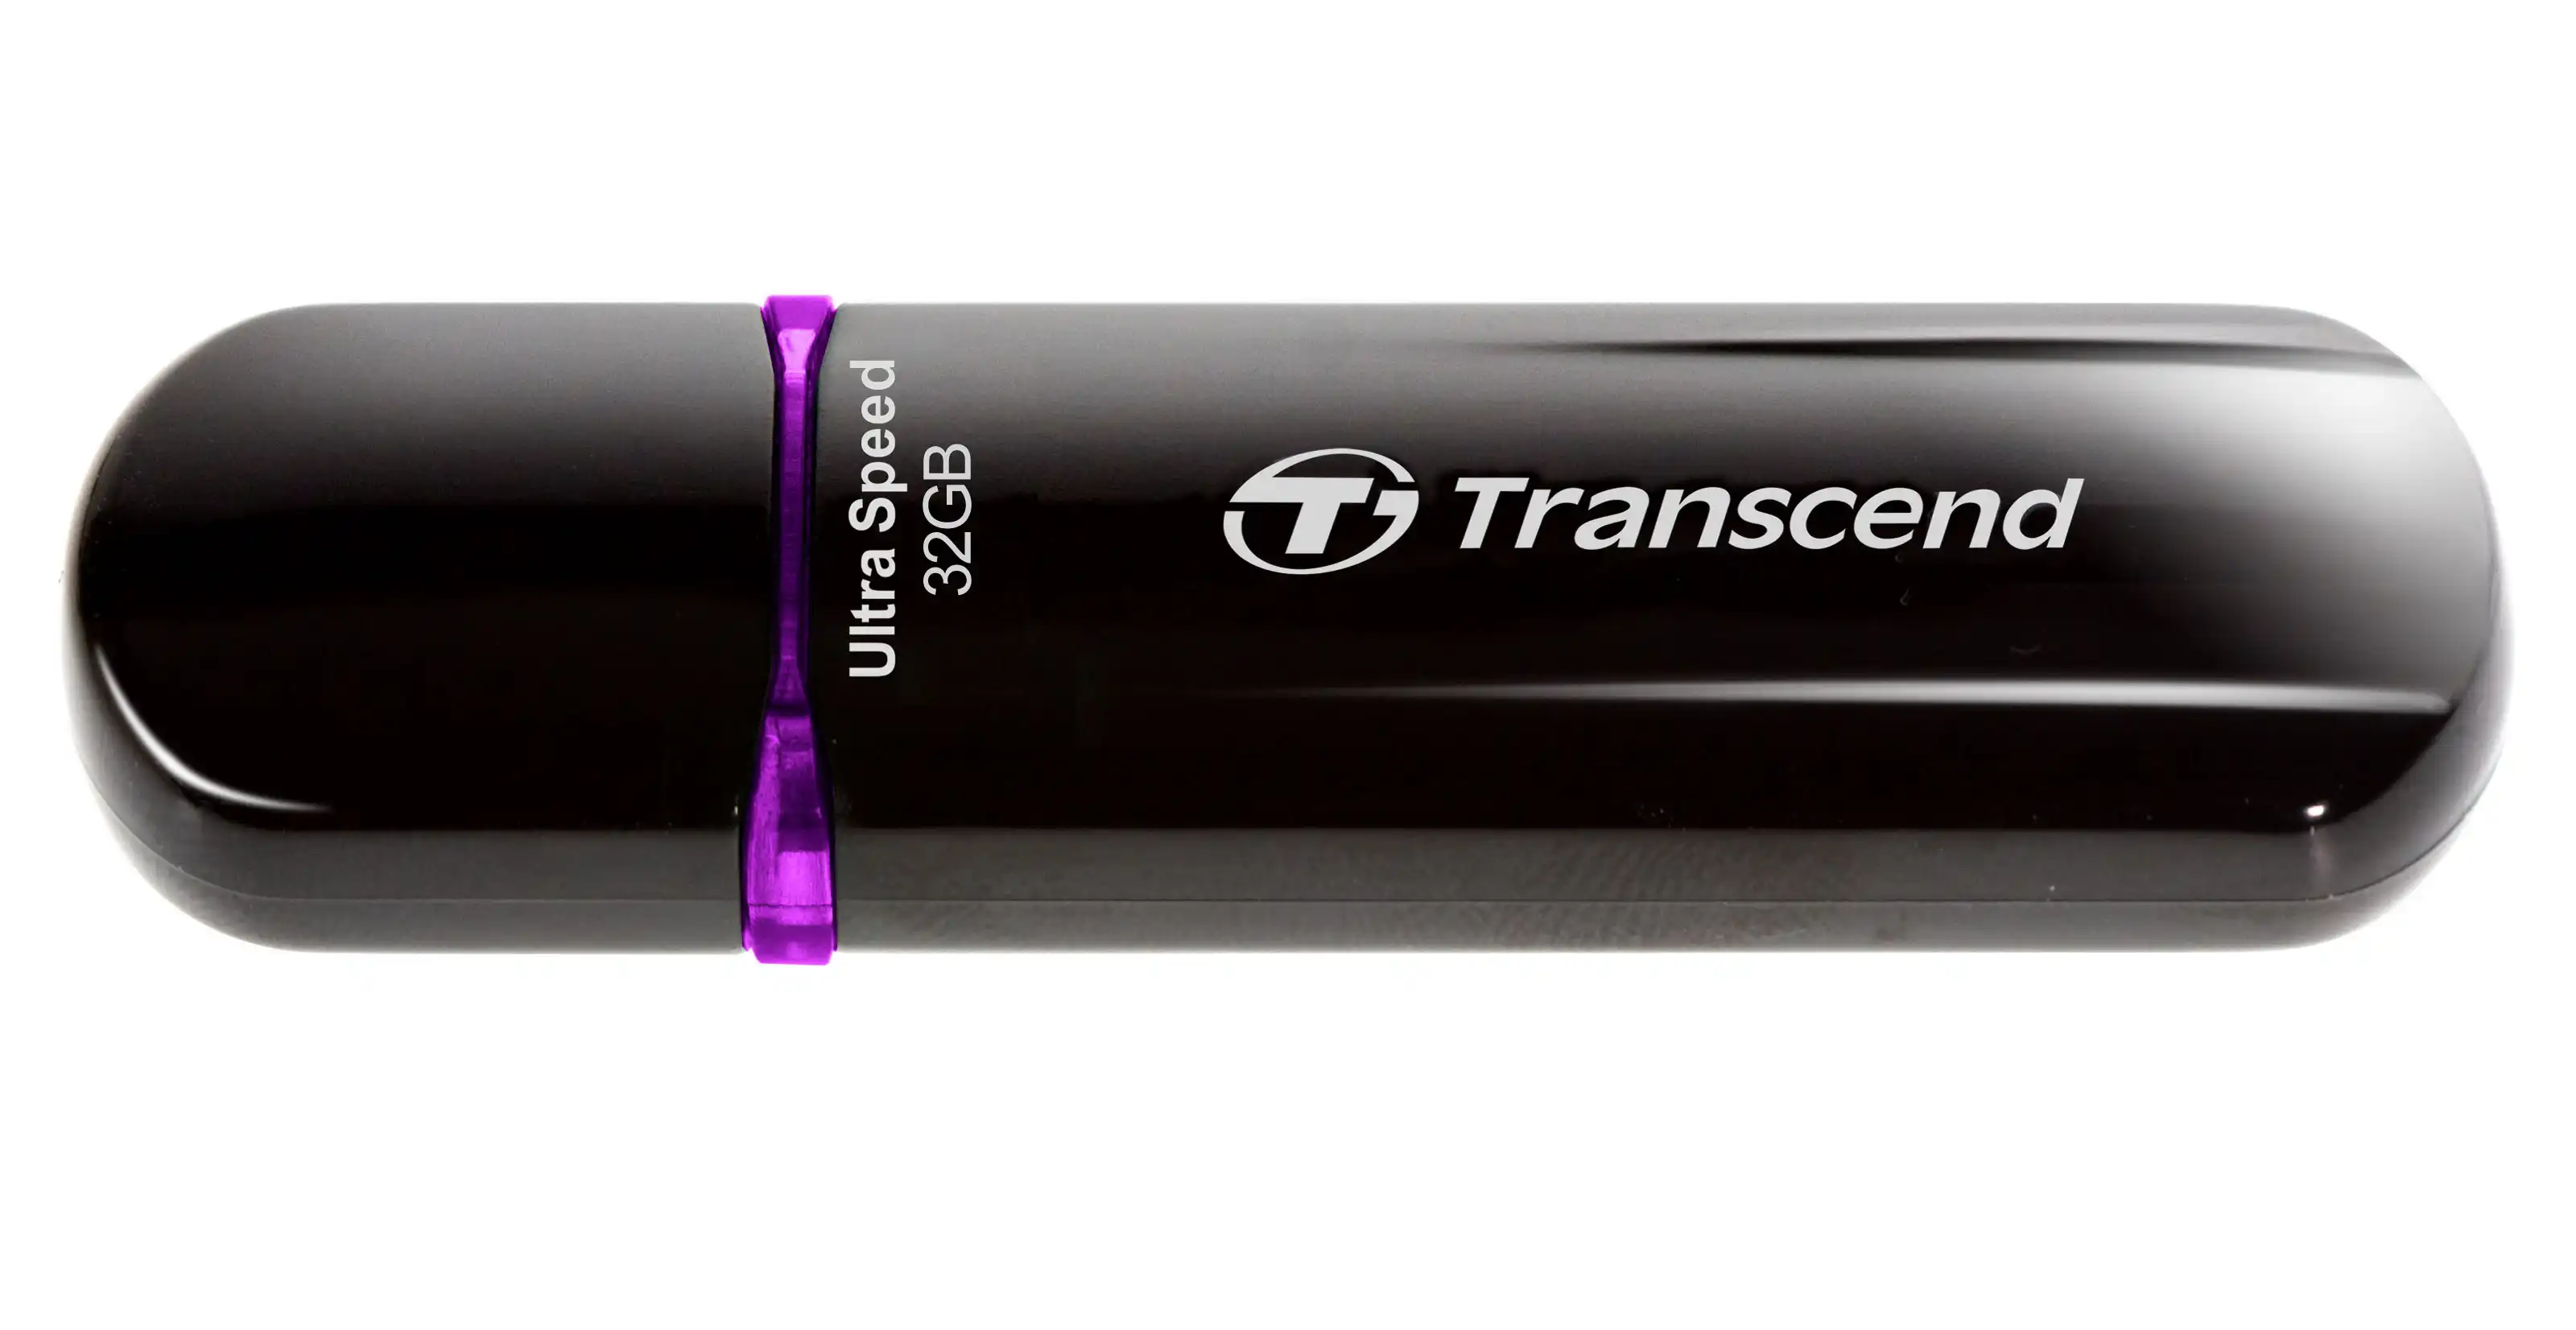 Флеш-накопитель TRANSCEND JetFlash 600 32GB (TS32GJF600)